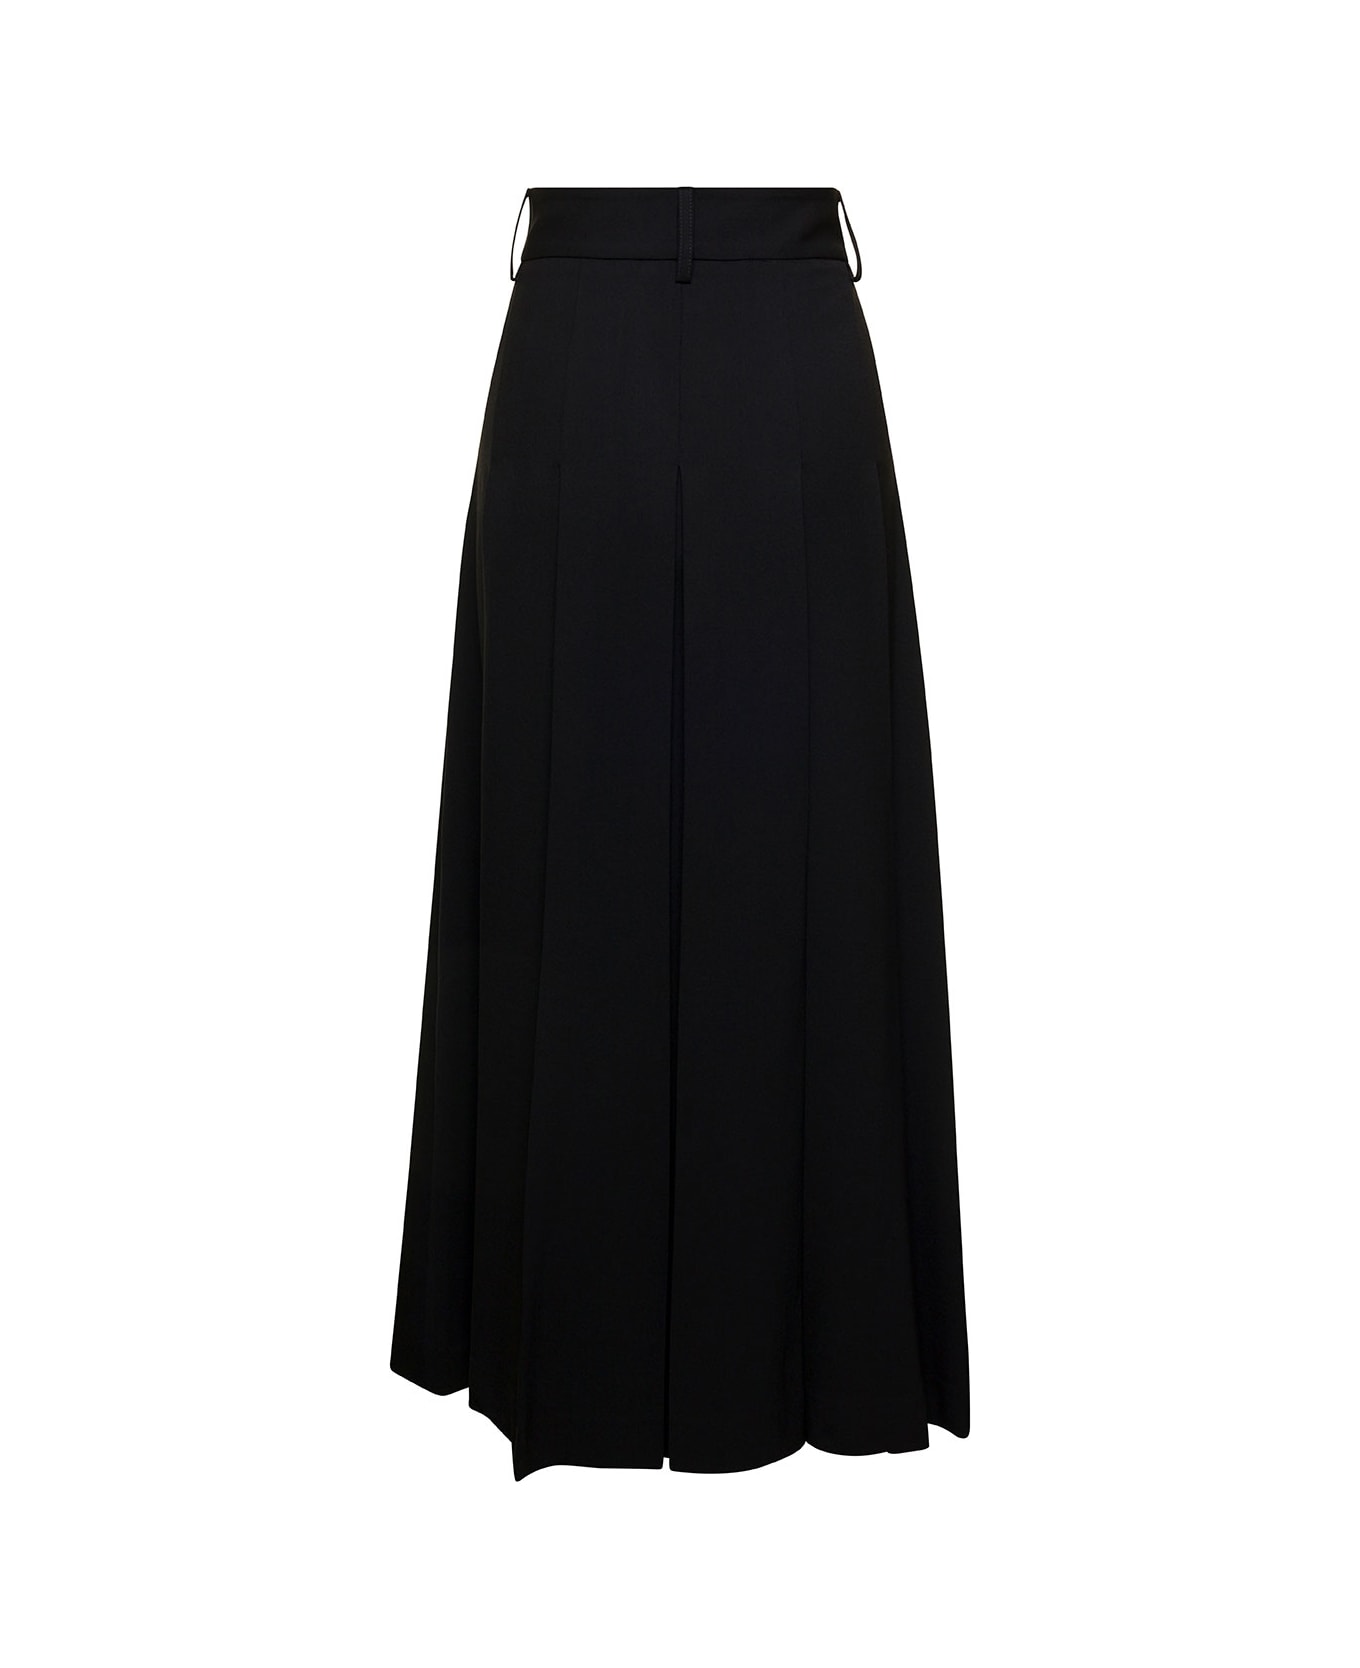 Parosh Long Black Pleated Skirt With Belt Loops In Stretch Wool Woman - Black